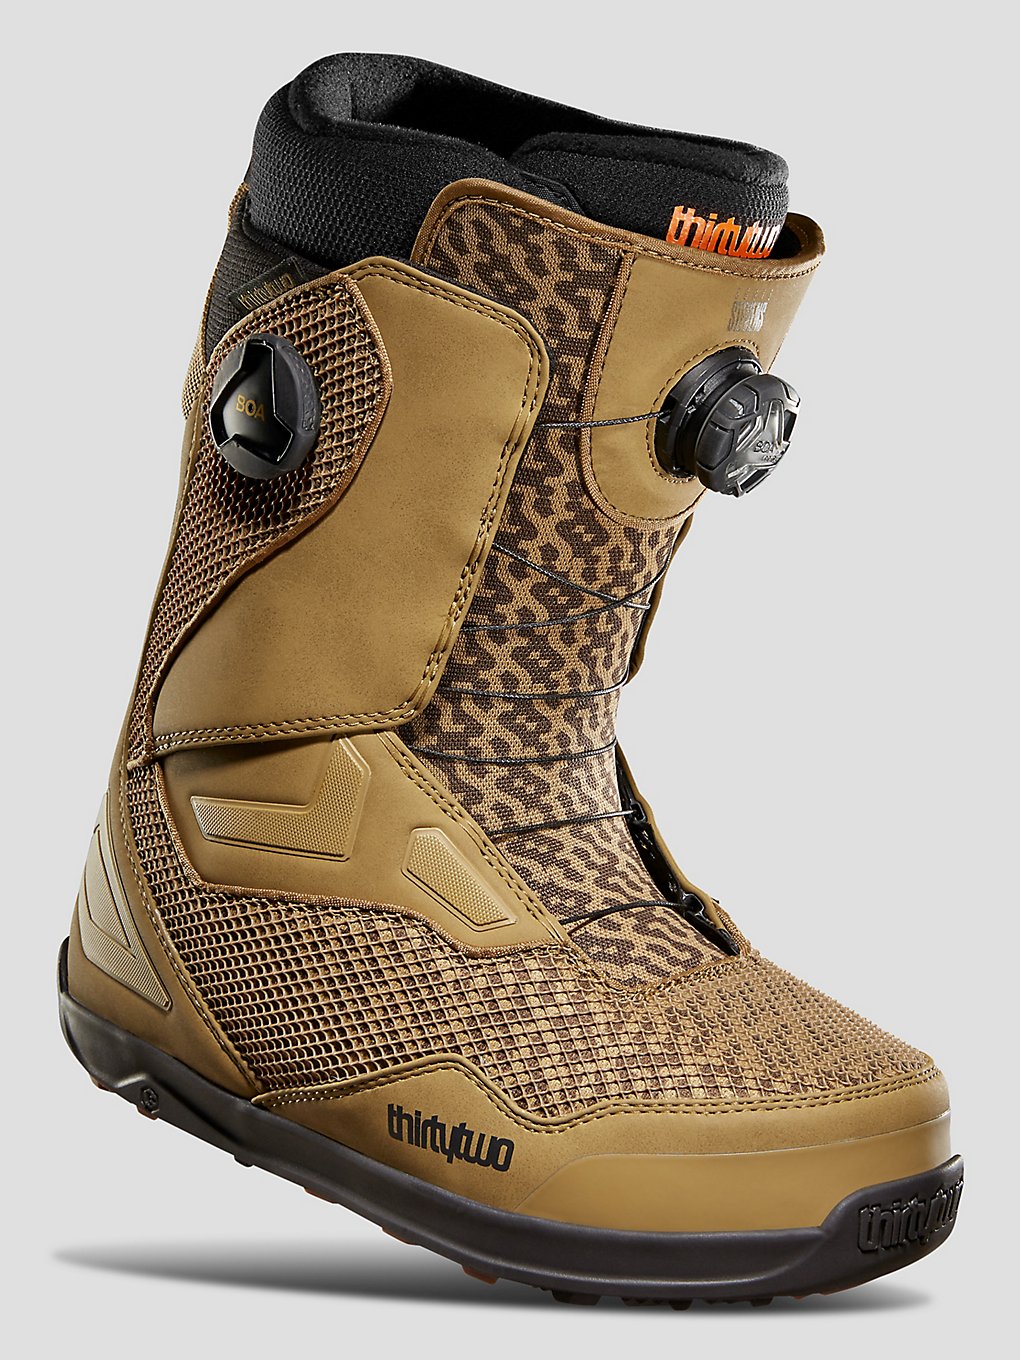 ThirtyTwo TM 2 Double BOA Stevens Snowboard Boots brown kaufen